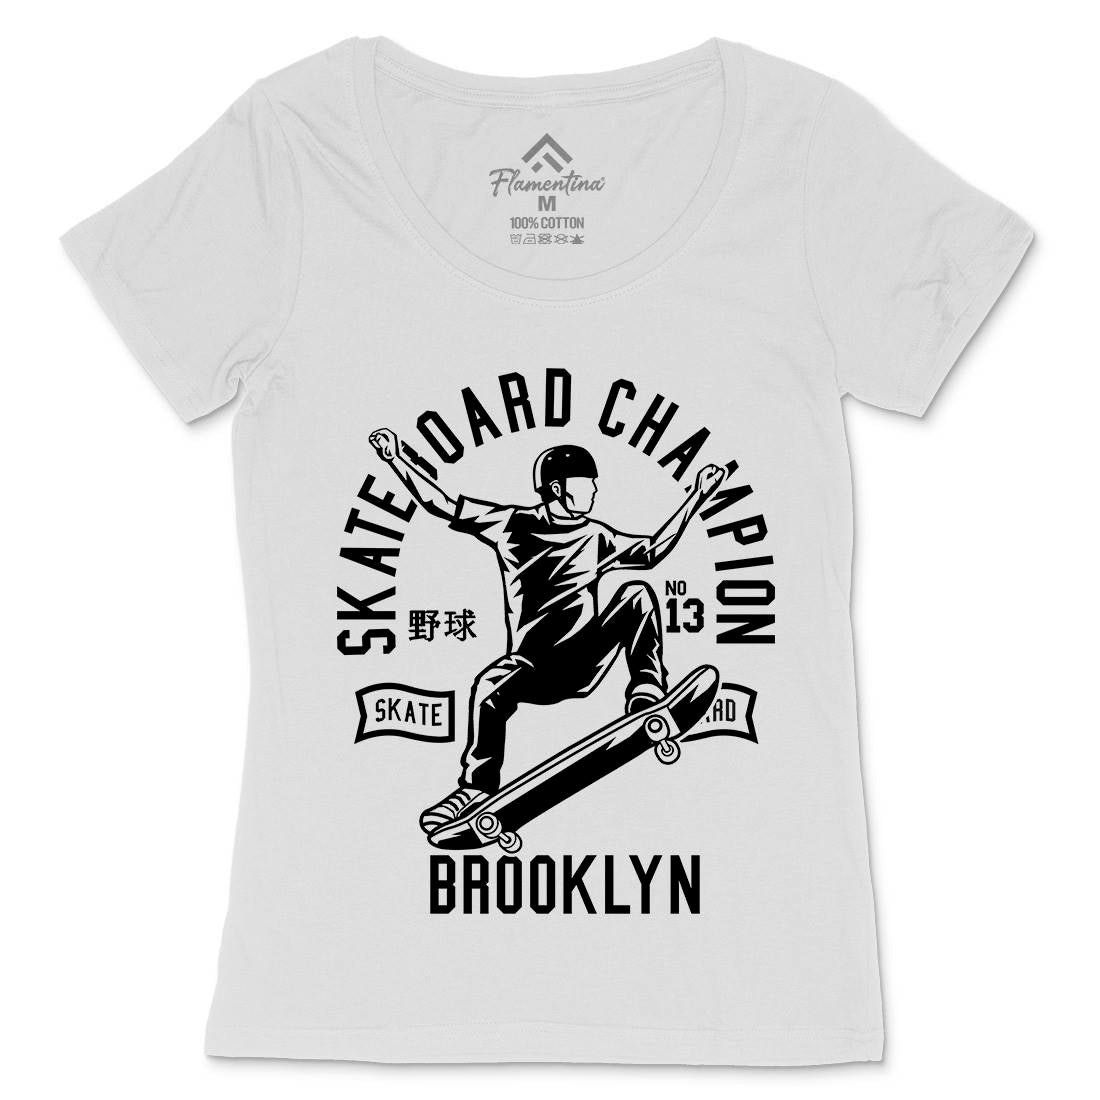 Skateboard Champion Womens Scoop Neck T-Shirt Skate B622